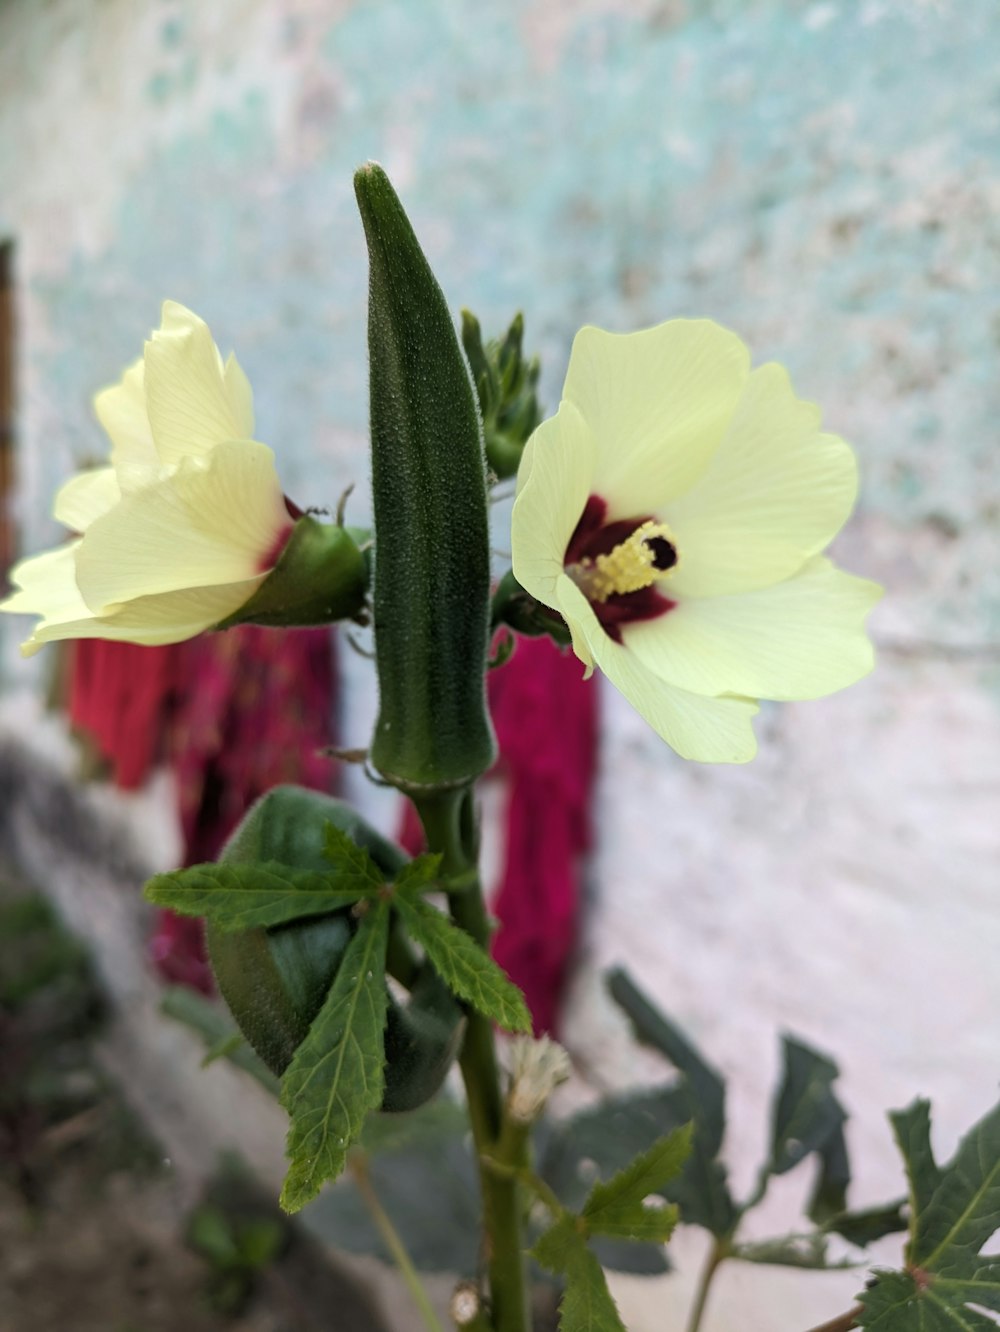 a close up of a flower near a wall